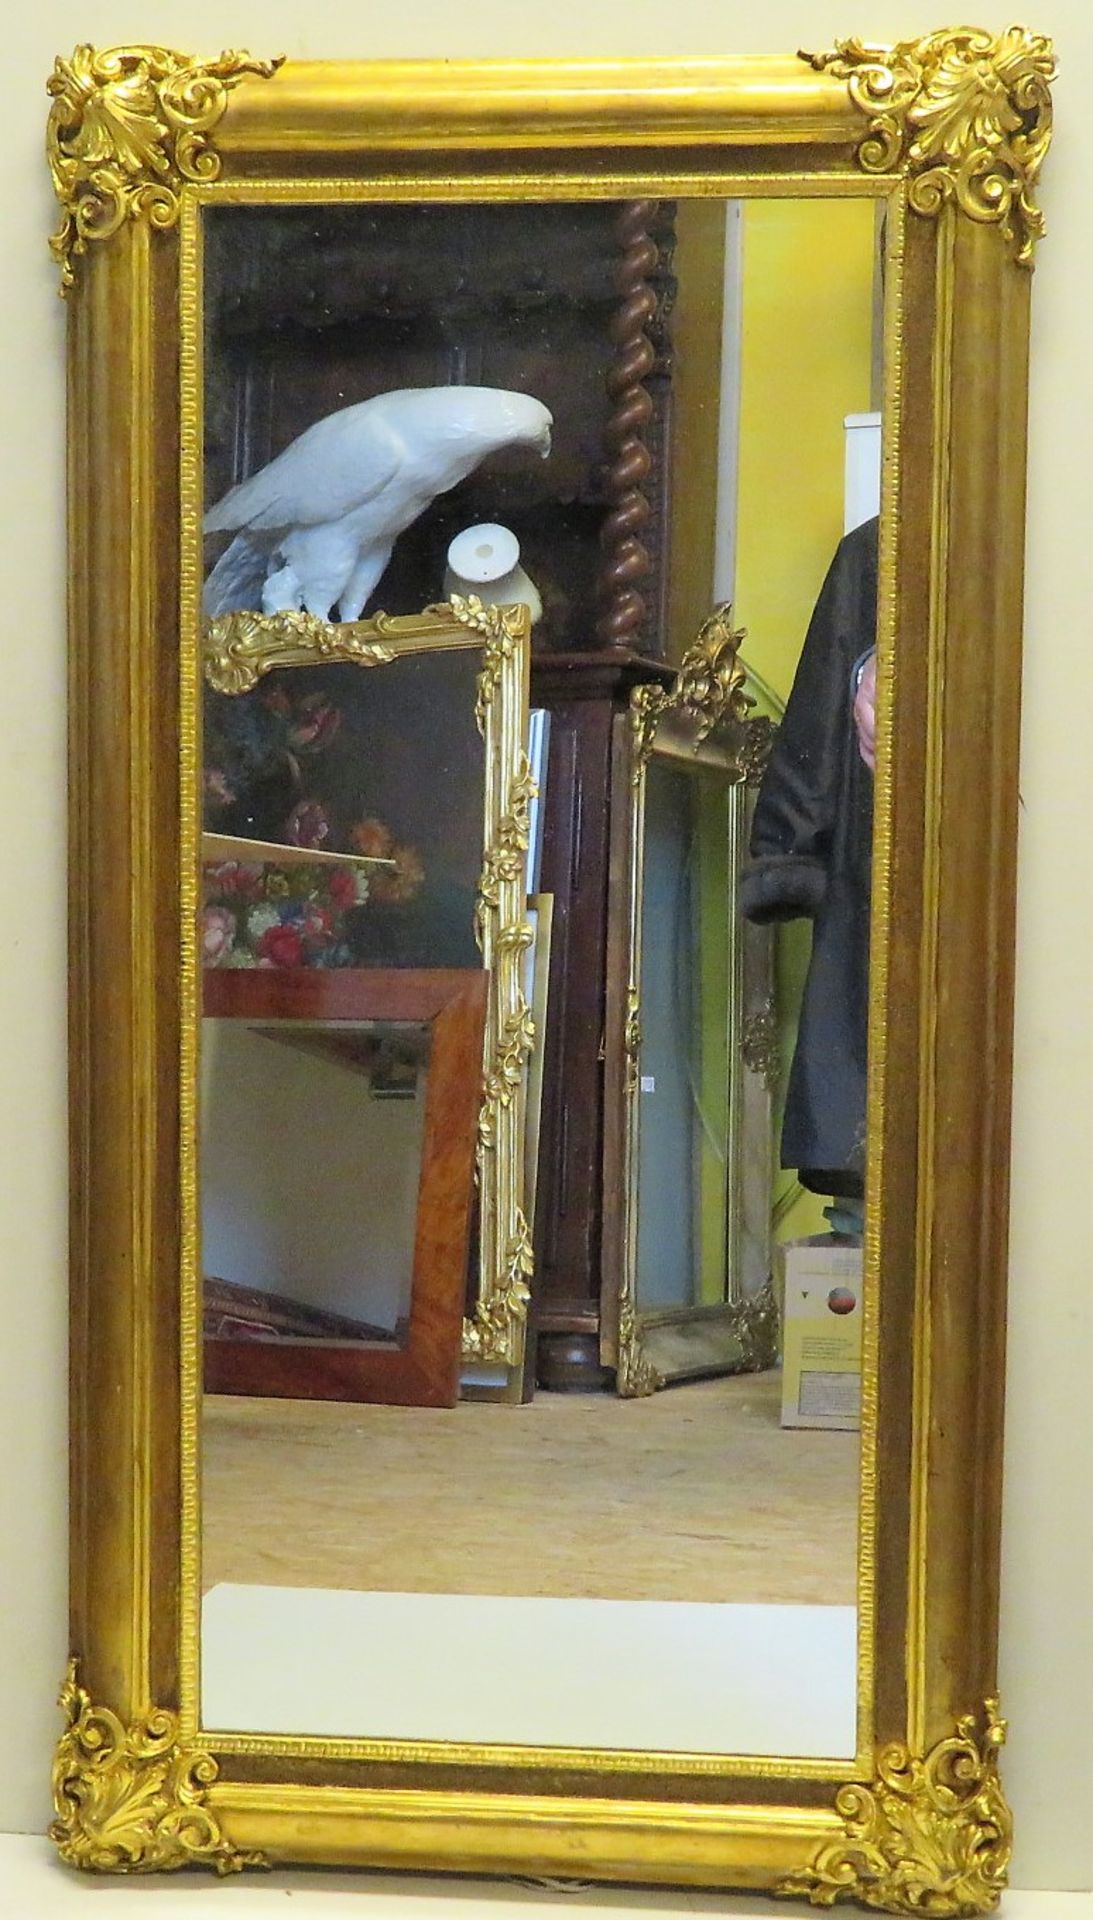 Spiegel, 19. Jahrhundert, Stuck vergoldet, 109 x 58 cm.